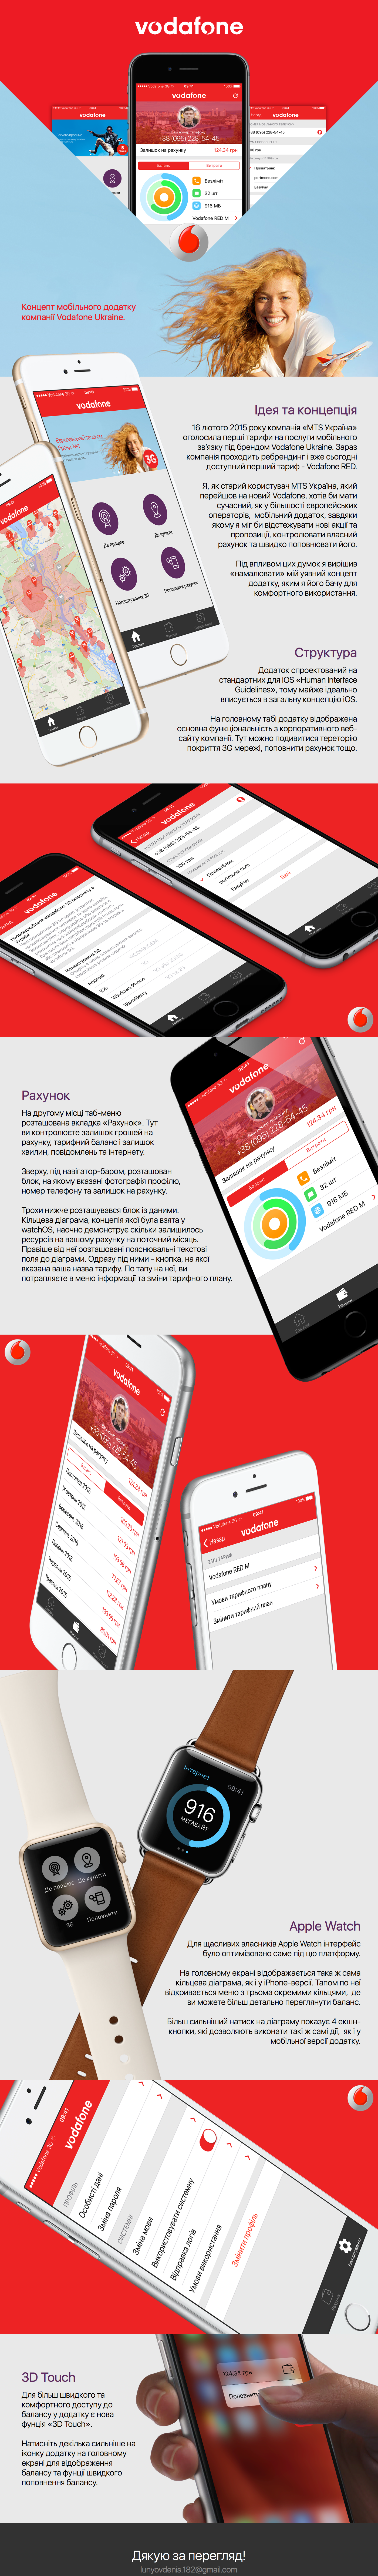 vodafone ukraine app ios apple watch design red White UI ux user interface sketch sketchapp mobile